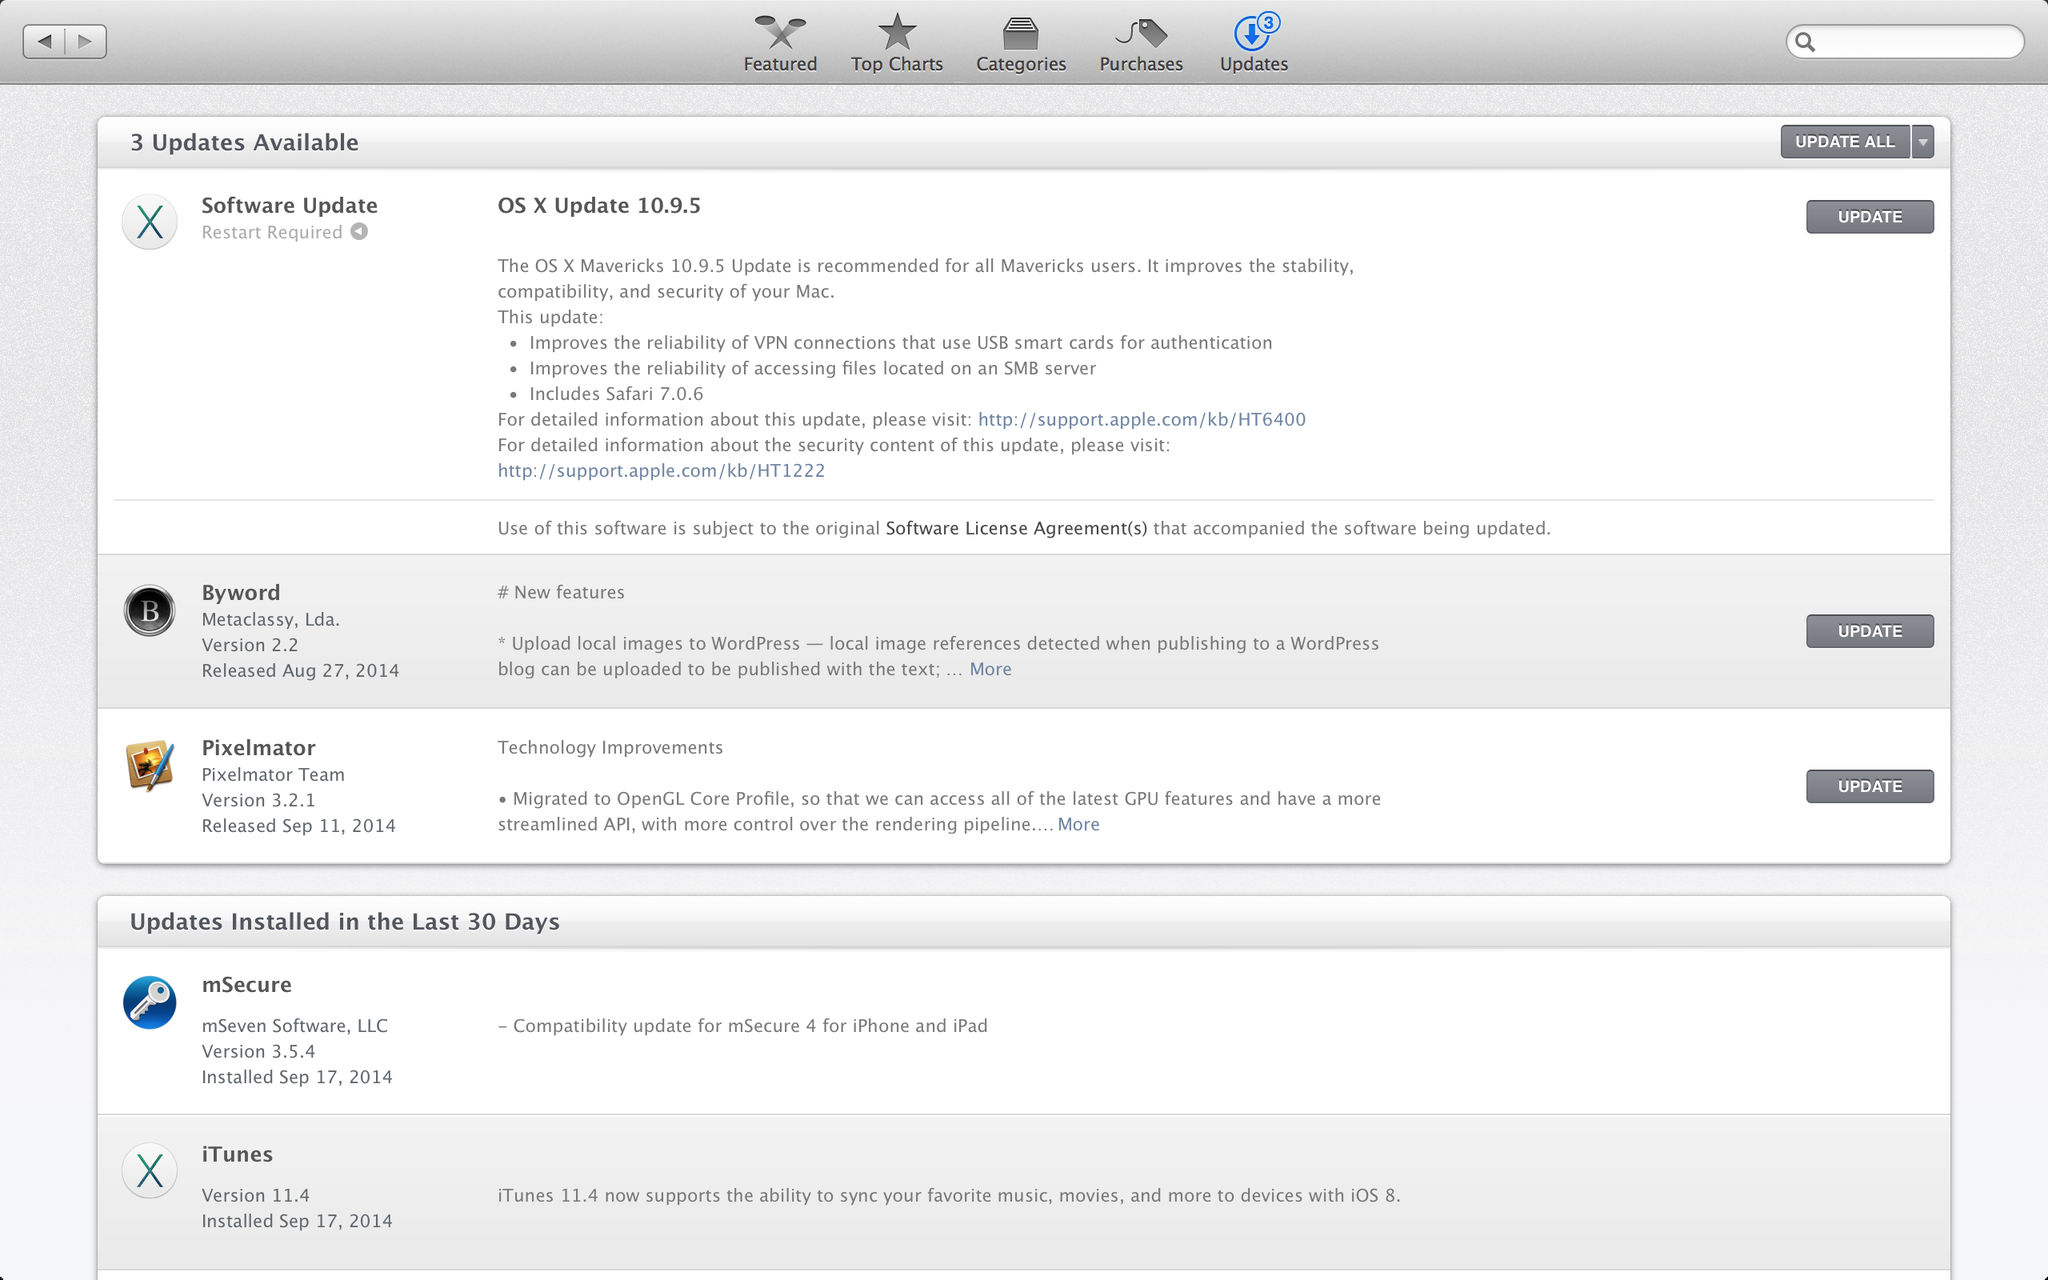 Apple updates OS X Mavericks to version 10.9.5